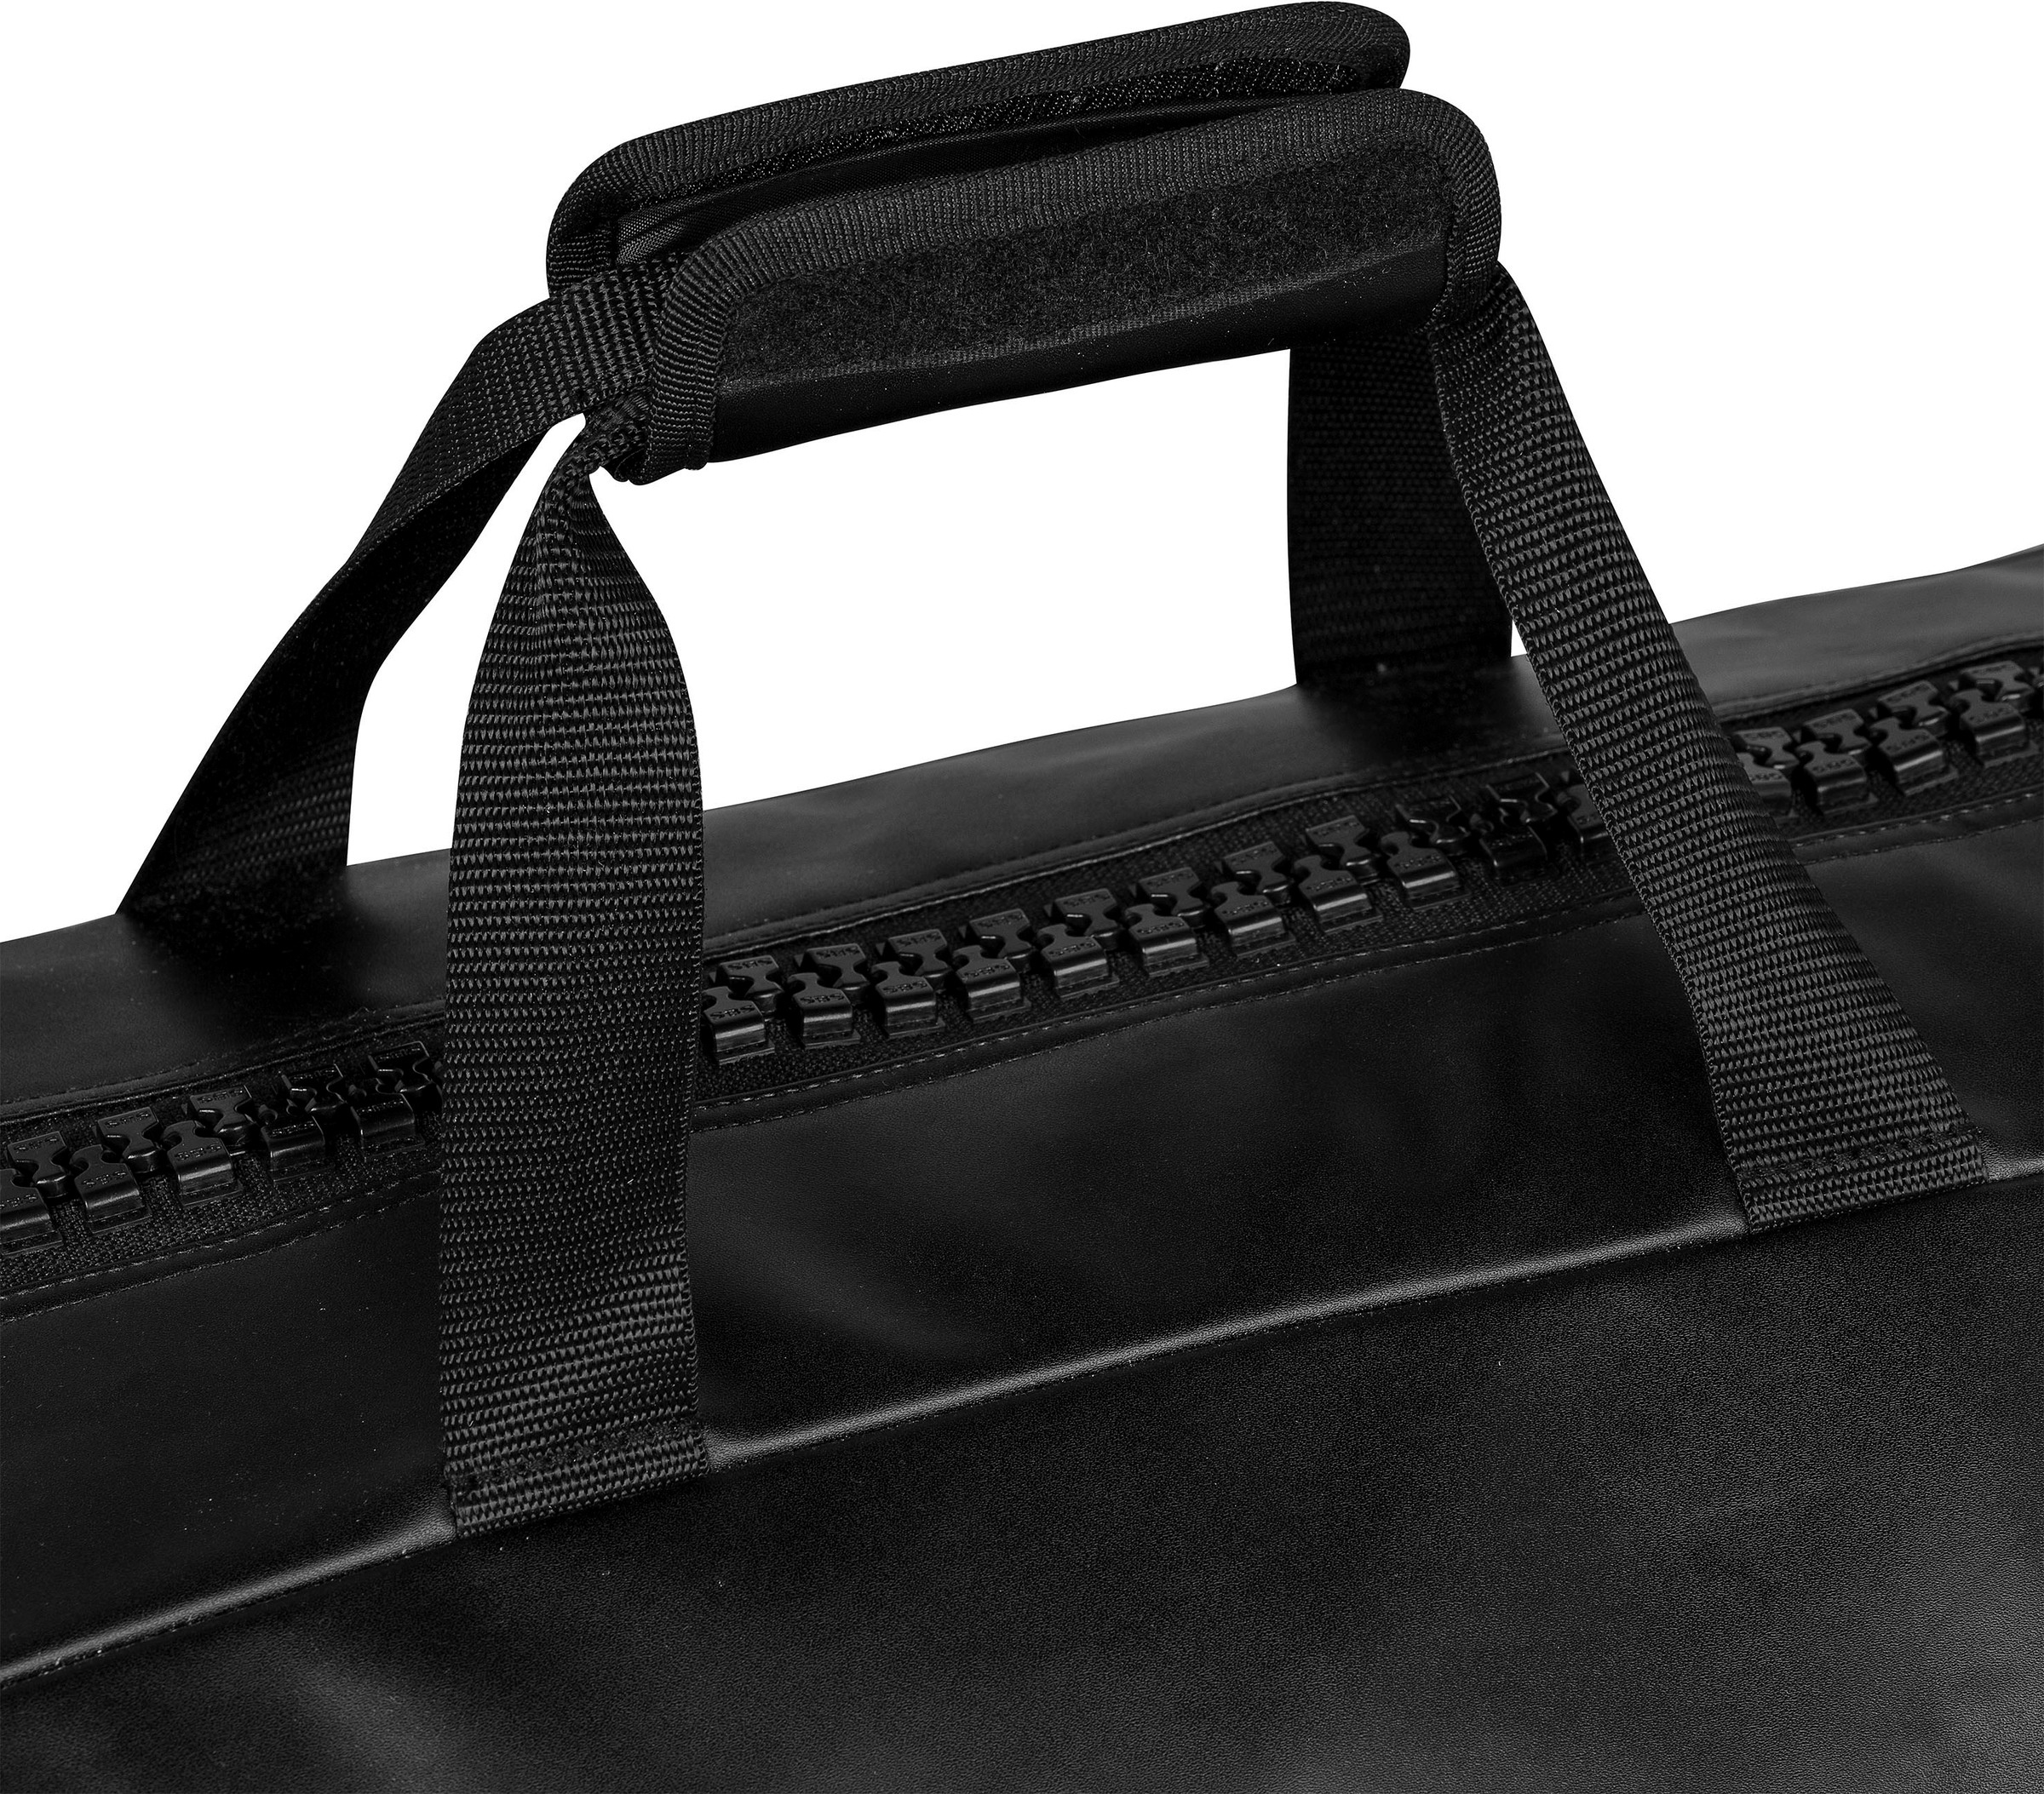 adidas Performance Sporttasche »Trolley Bag PU Combat Sports«, (1 tlg.)